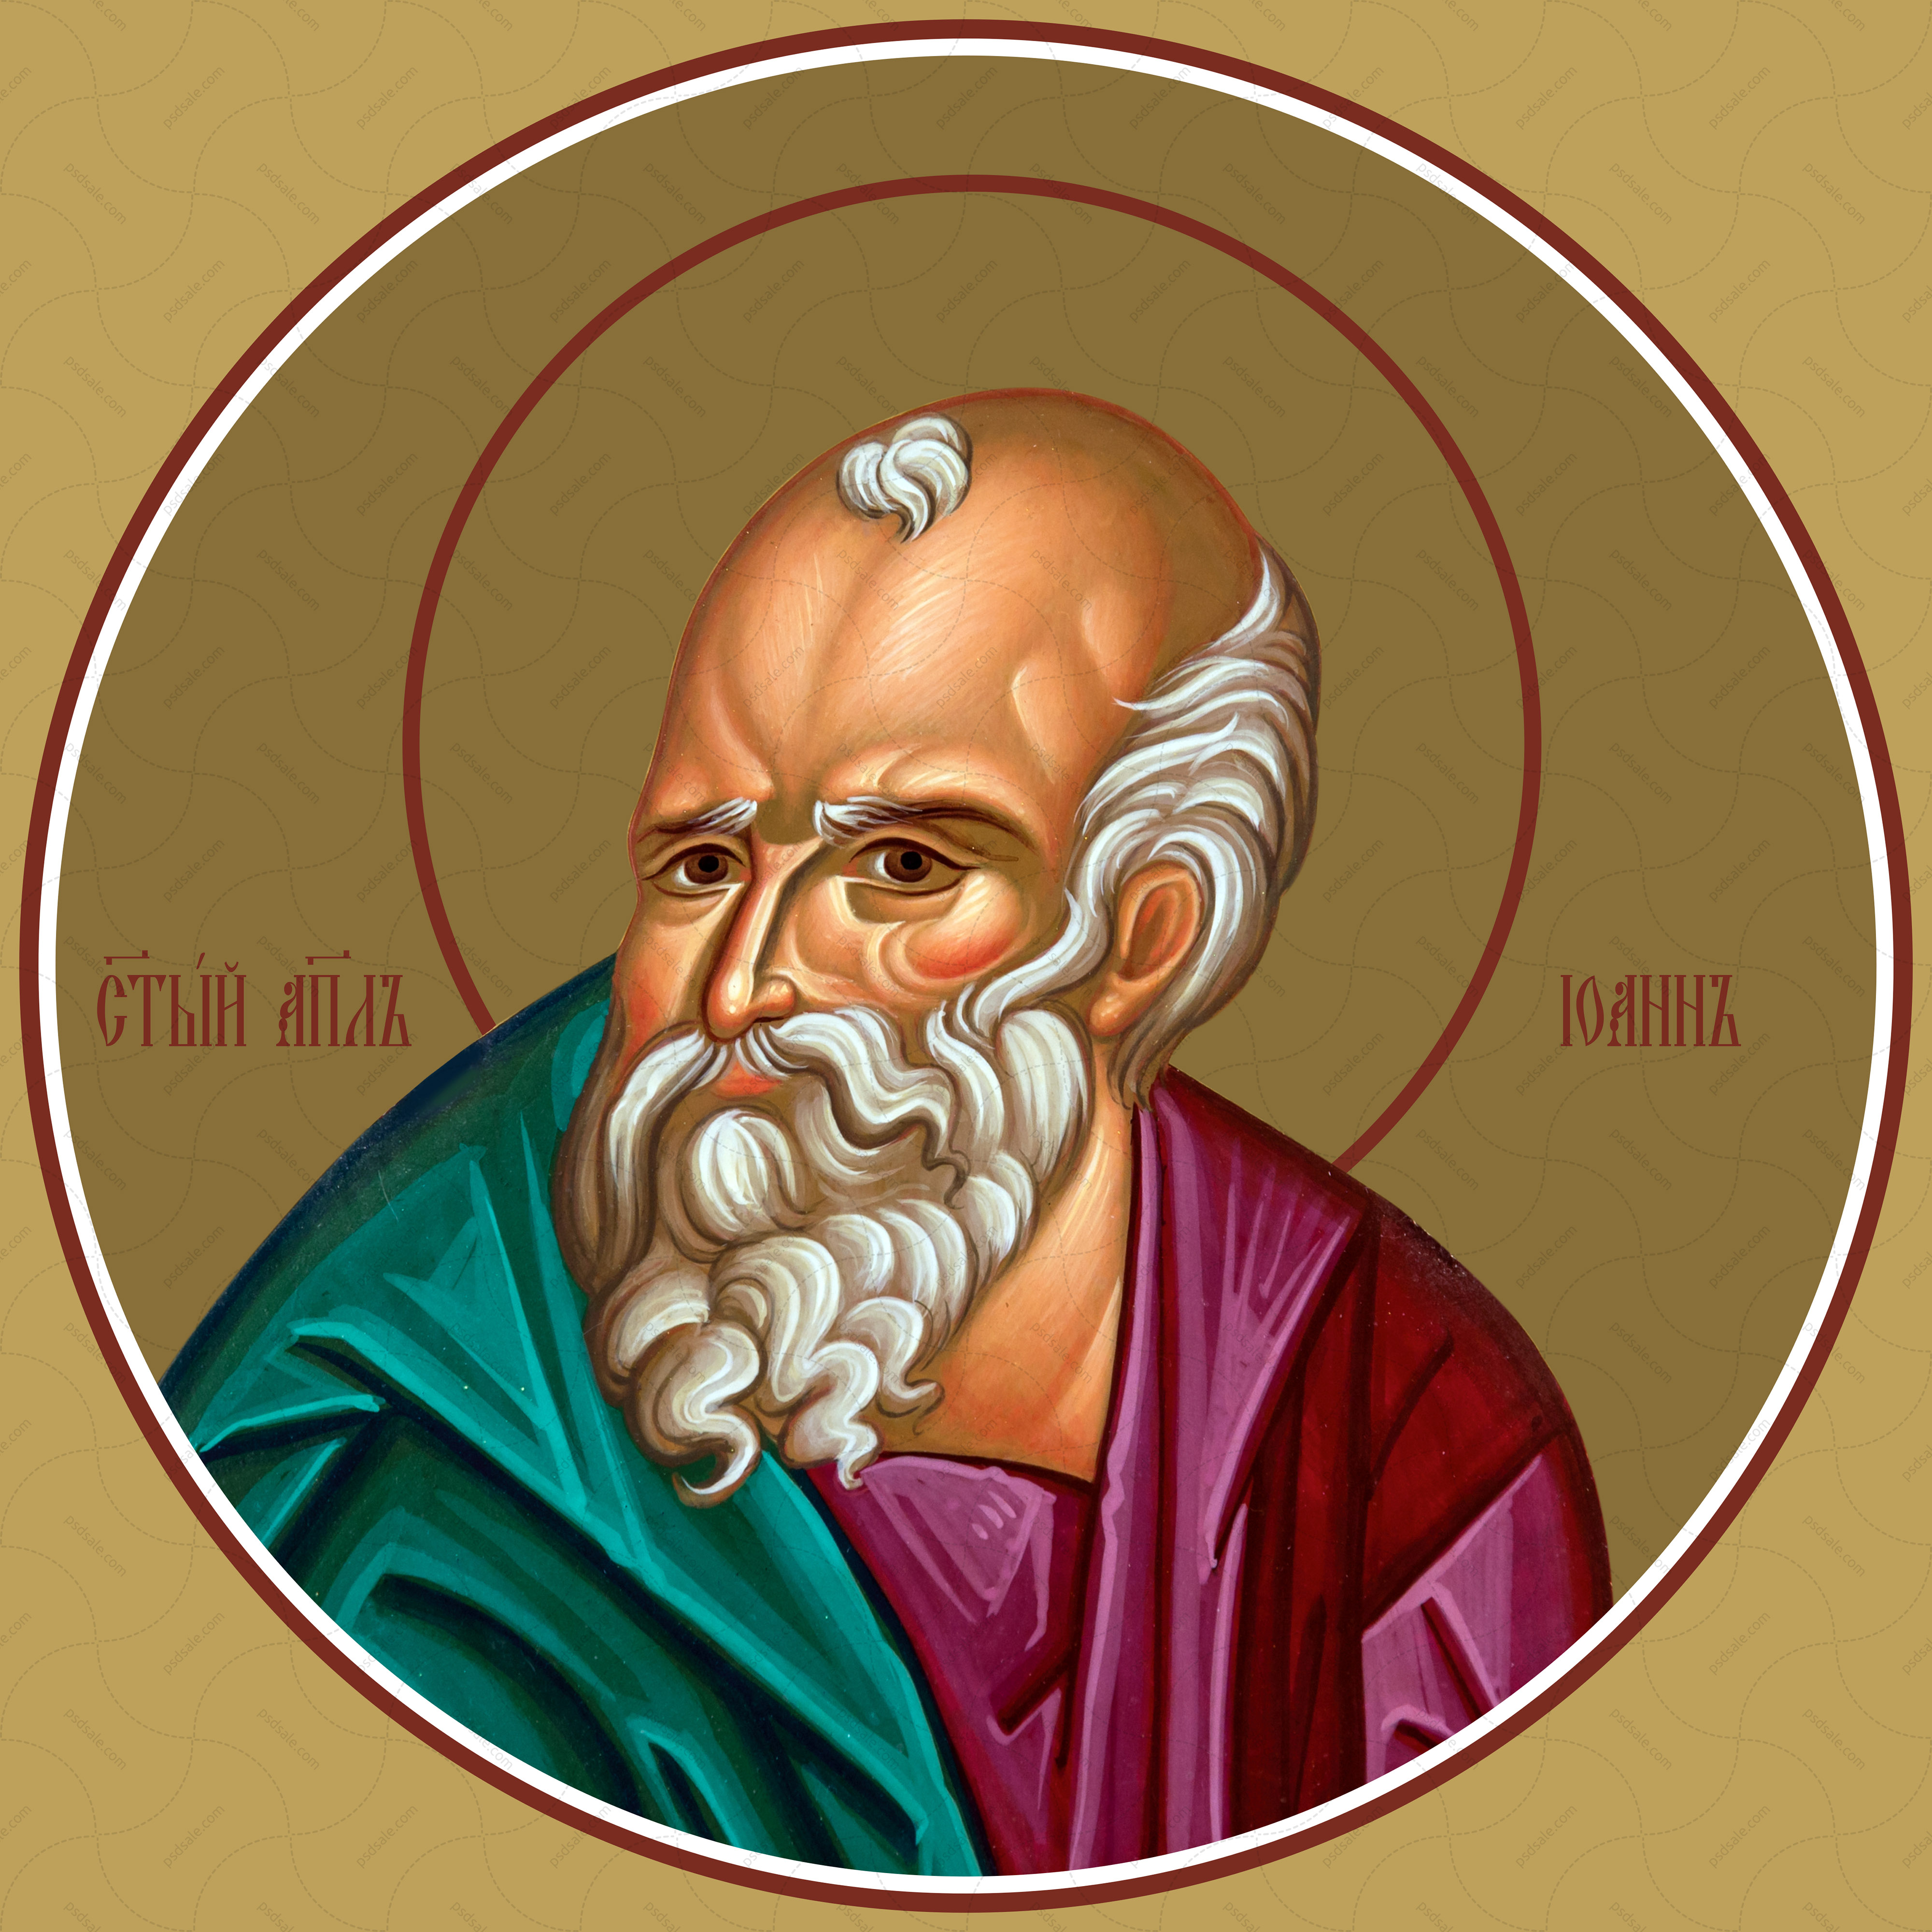 John the Evangelist (for iconostasis)